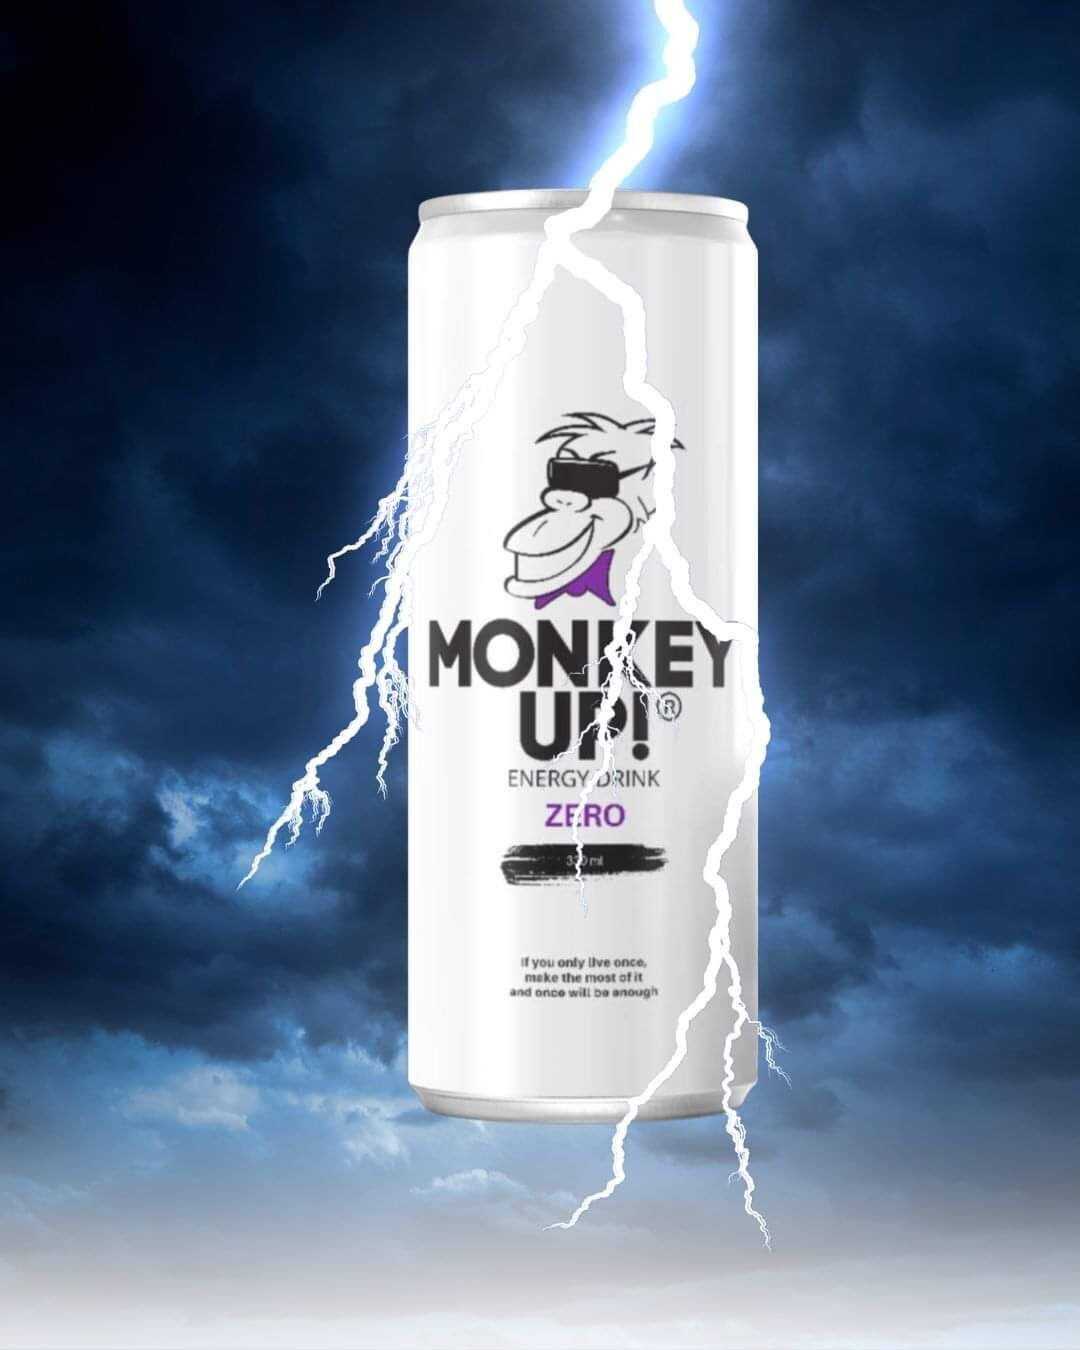 Monkey Up! Energy ZERO incl. PANT 48,- NOK